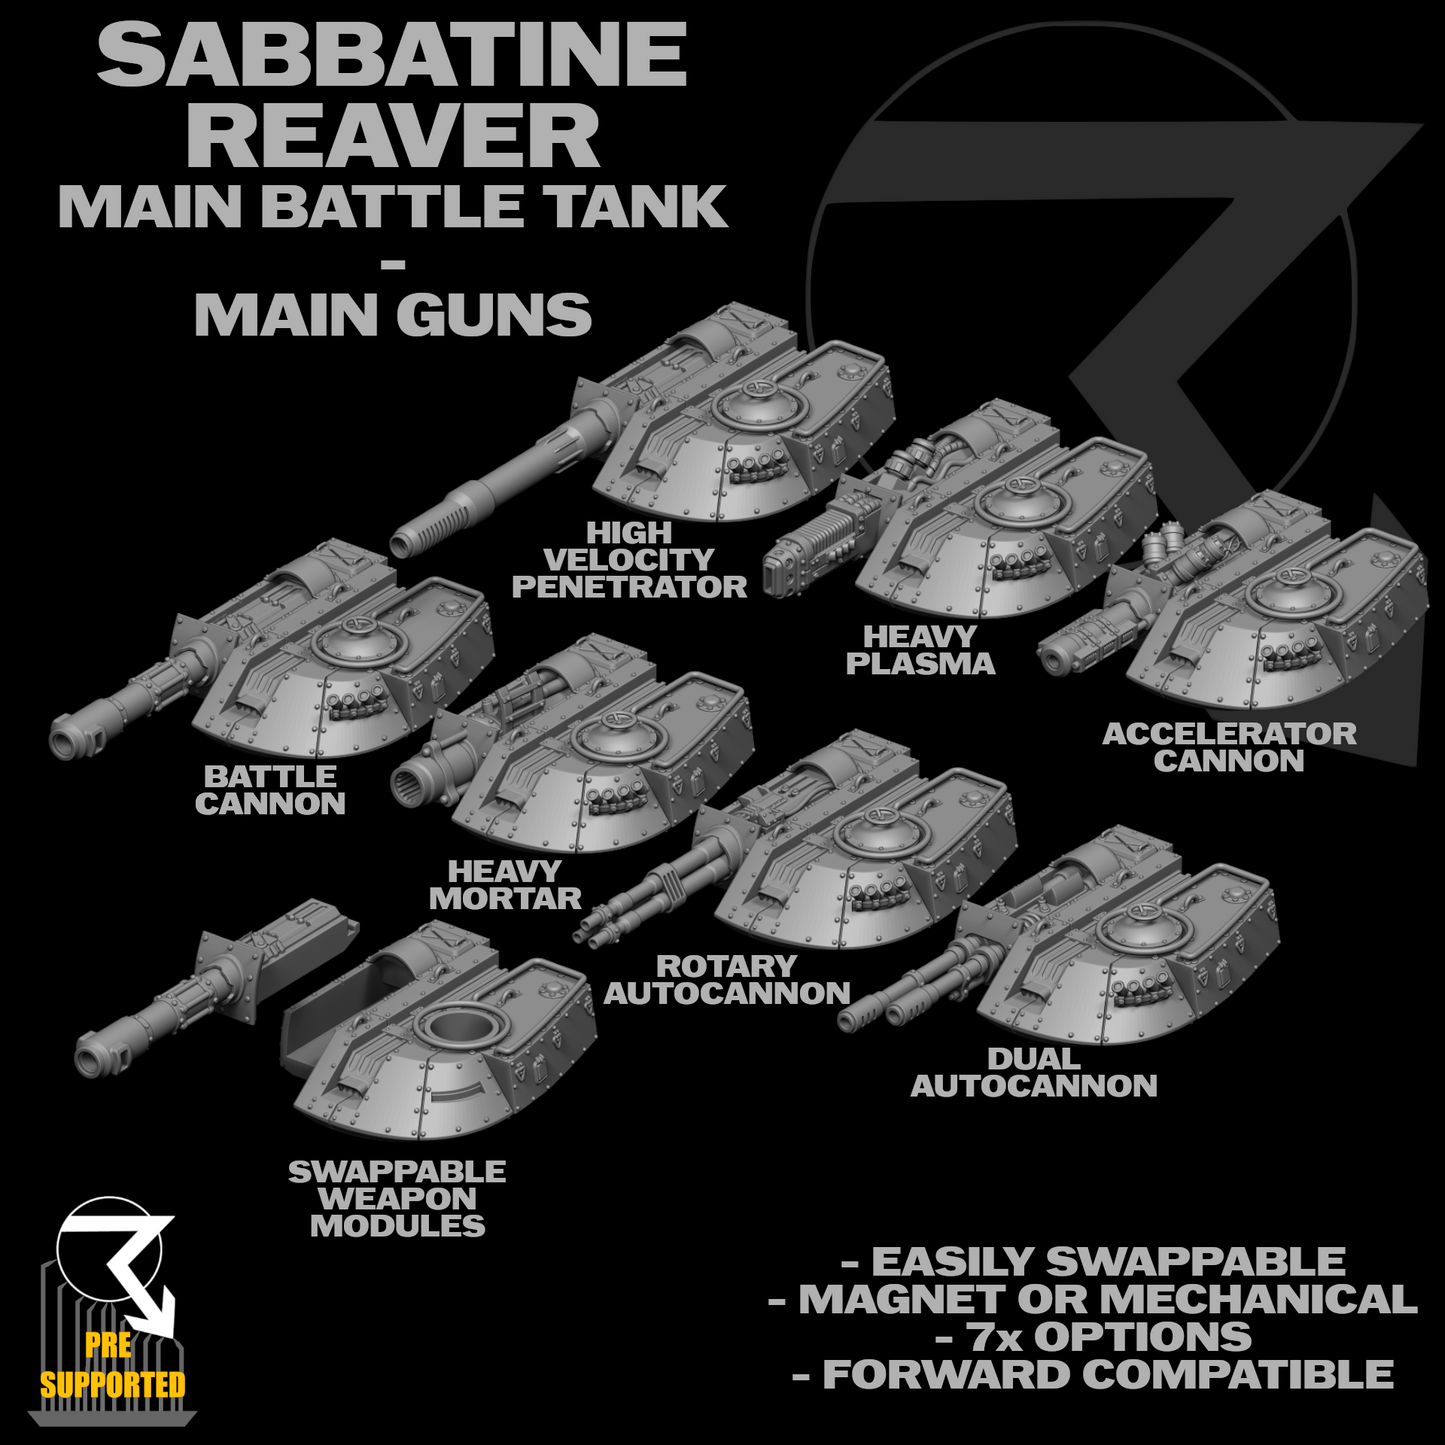 Sabbatine Reaver Main Battle Tank